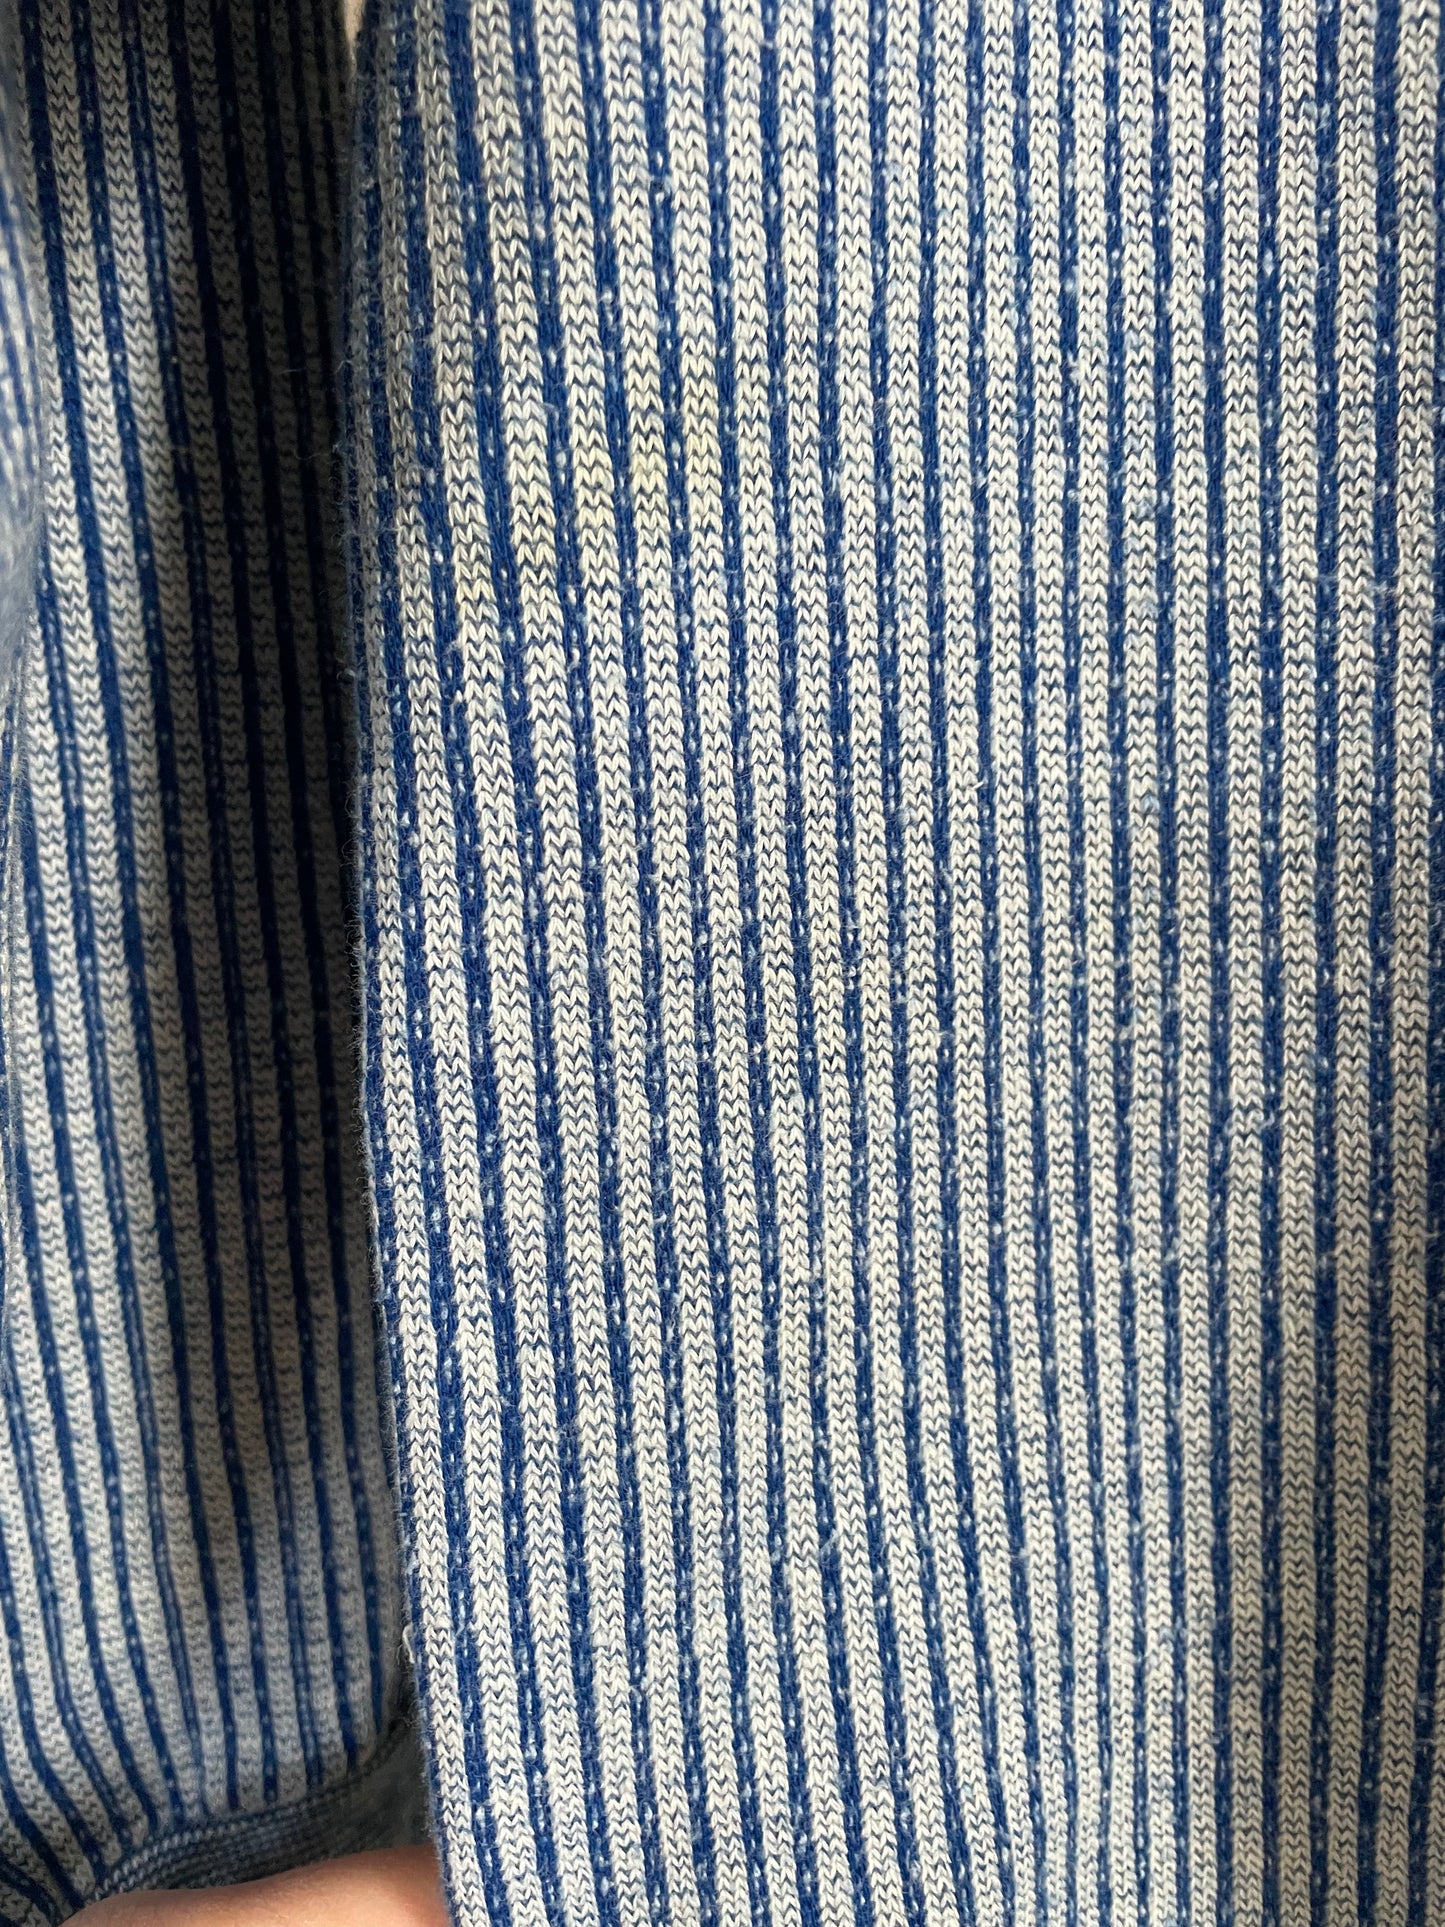 60s Blue And White Striped Sweatshirt